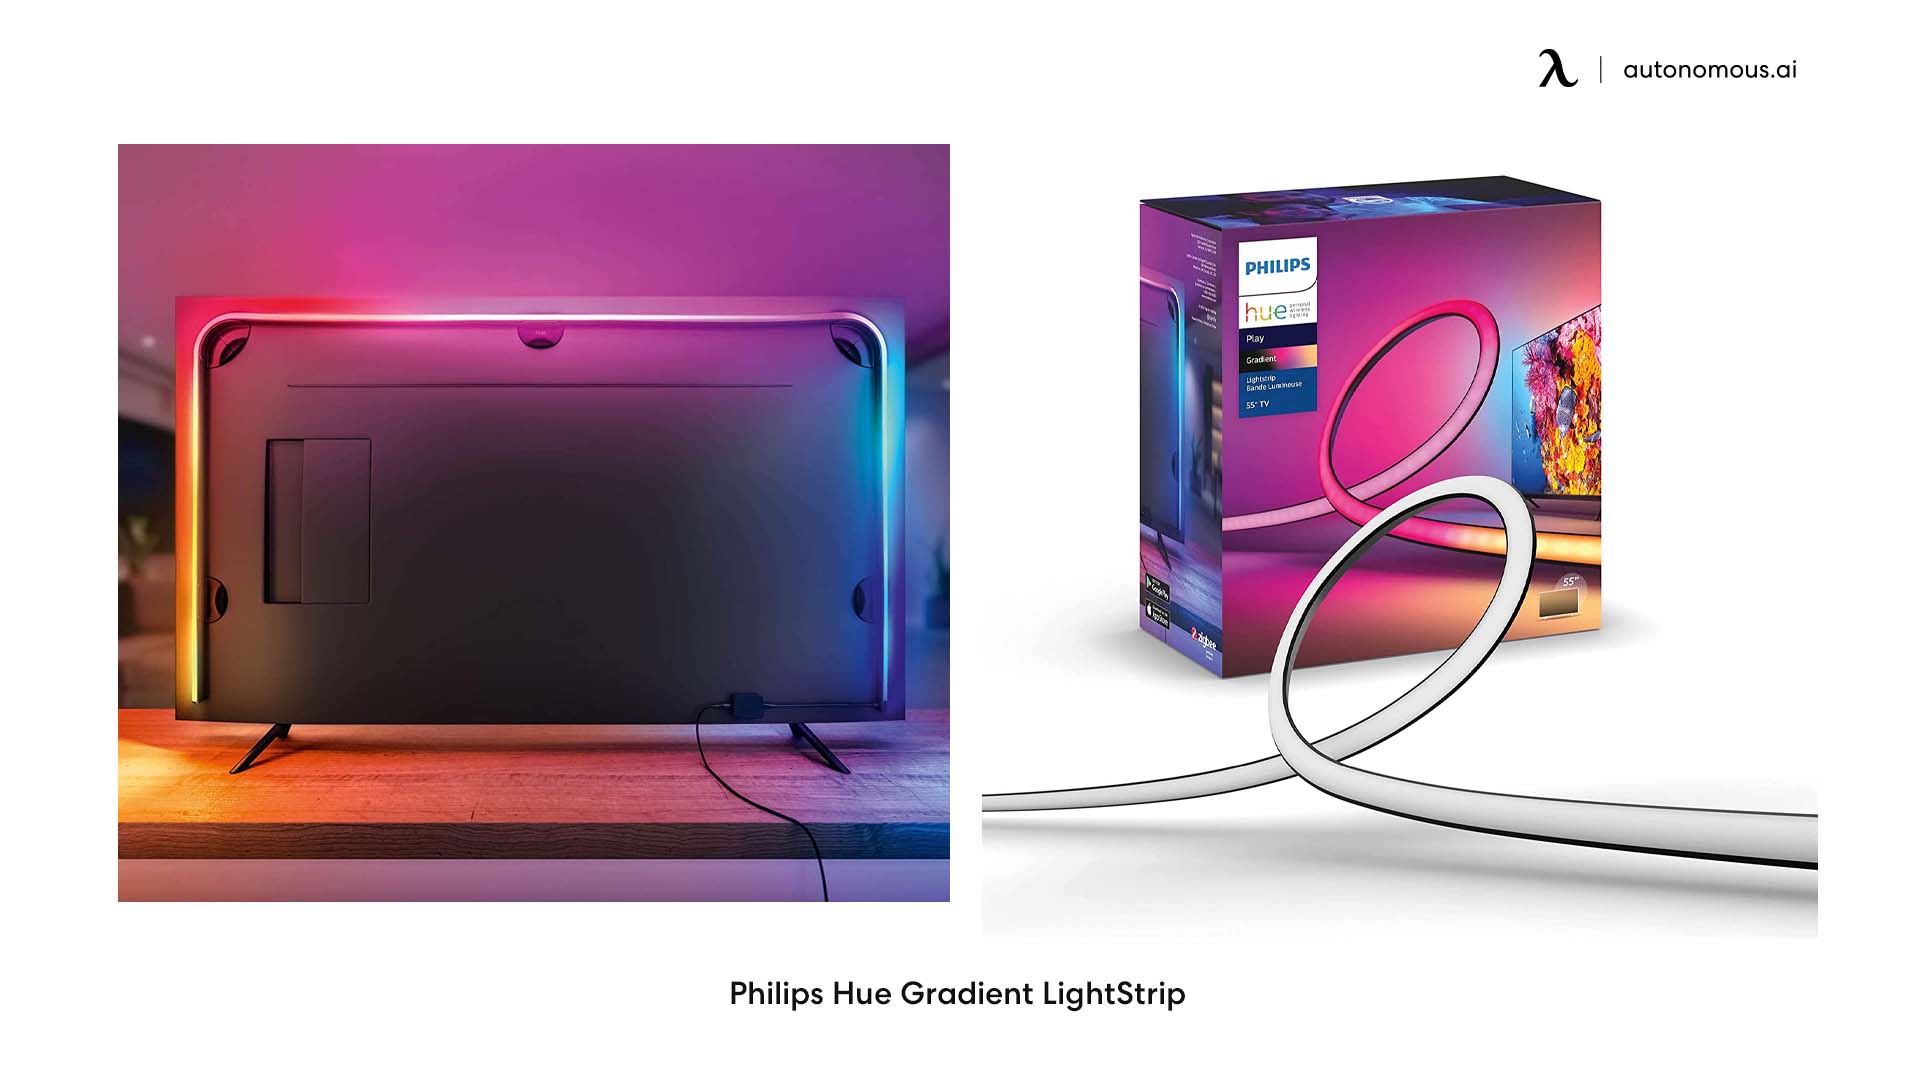 Philips Hue Gradient gaming lights